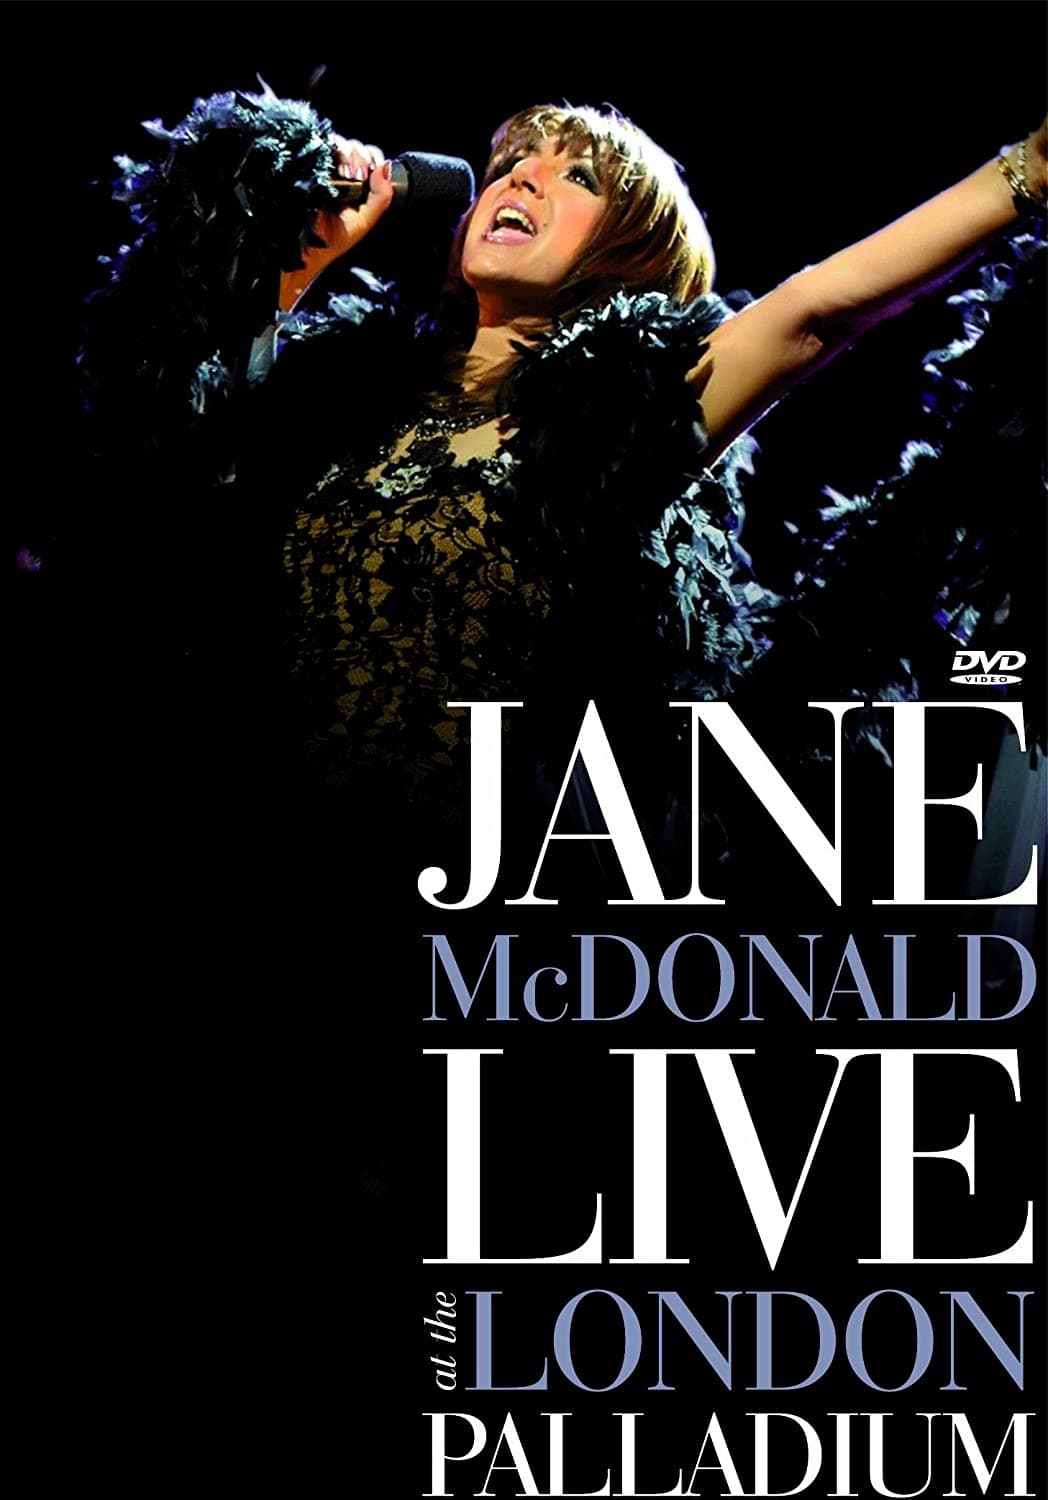 Jane McDonald: Live at the London Palladium